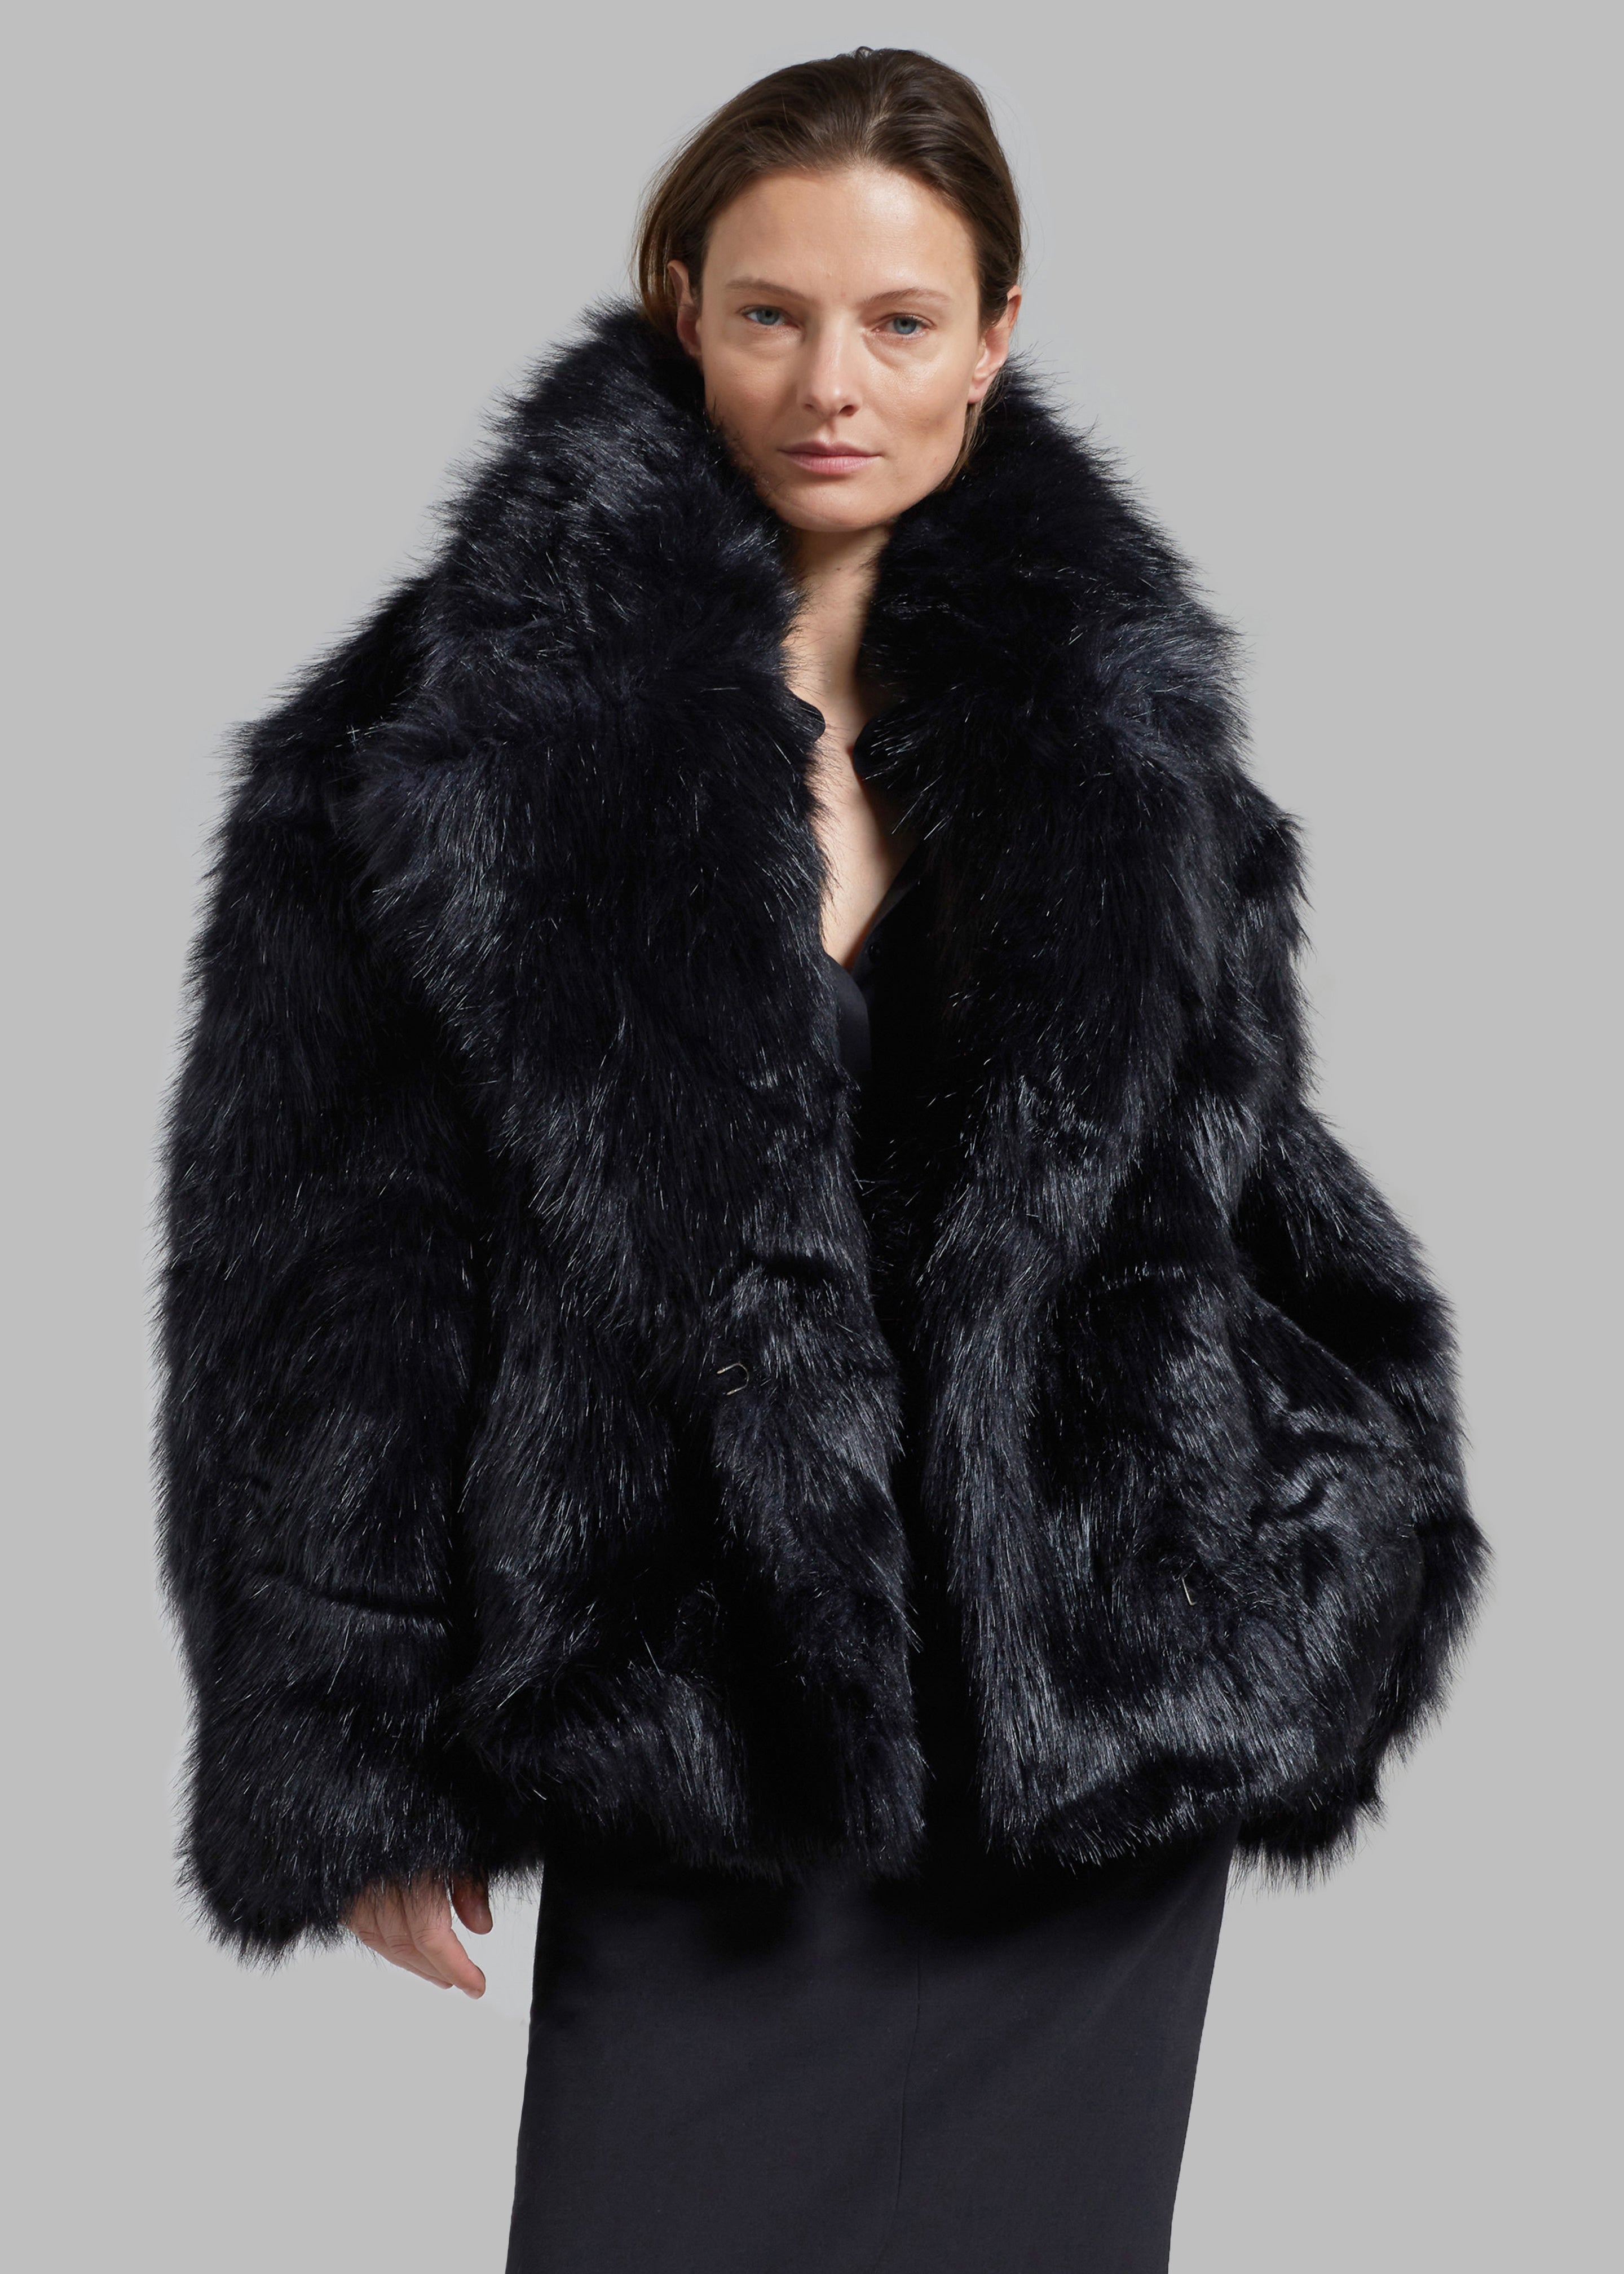 Fallon Short Faux Fur Coat - Black - 2